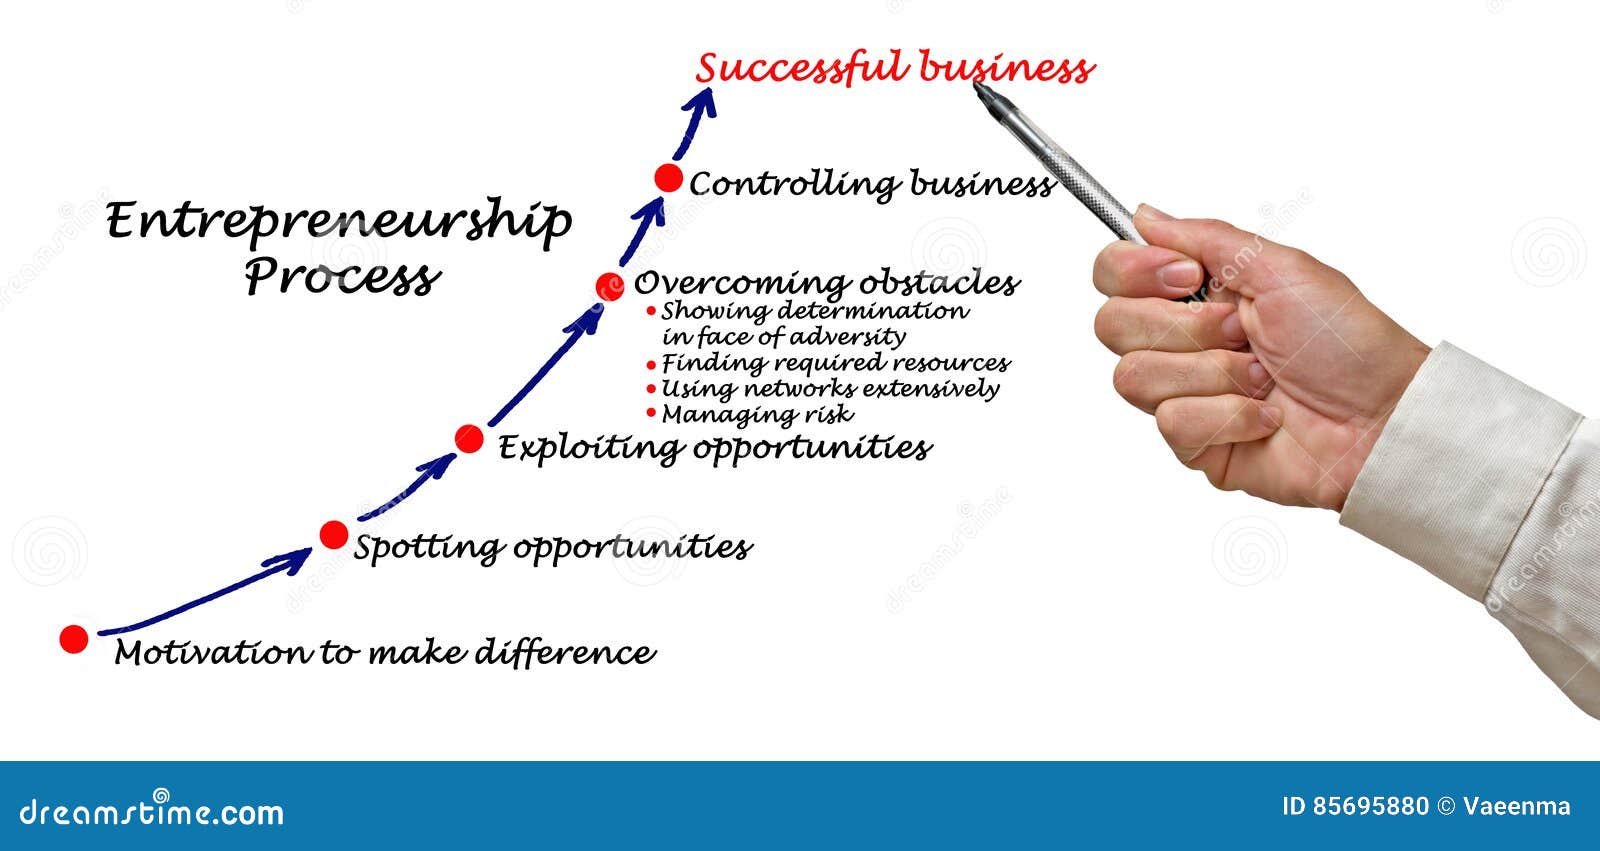 business planning process in entrepreneurship development